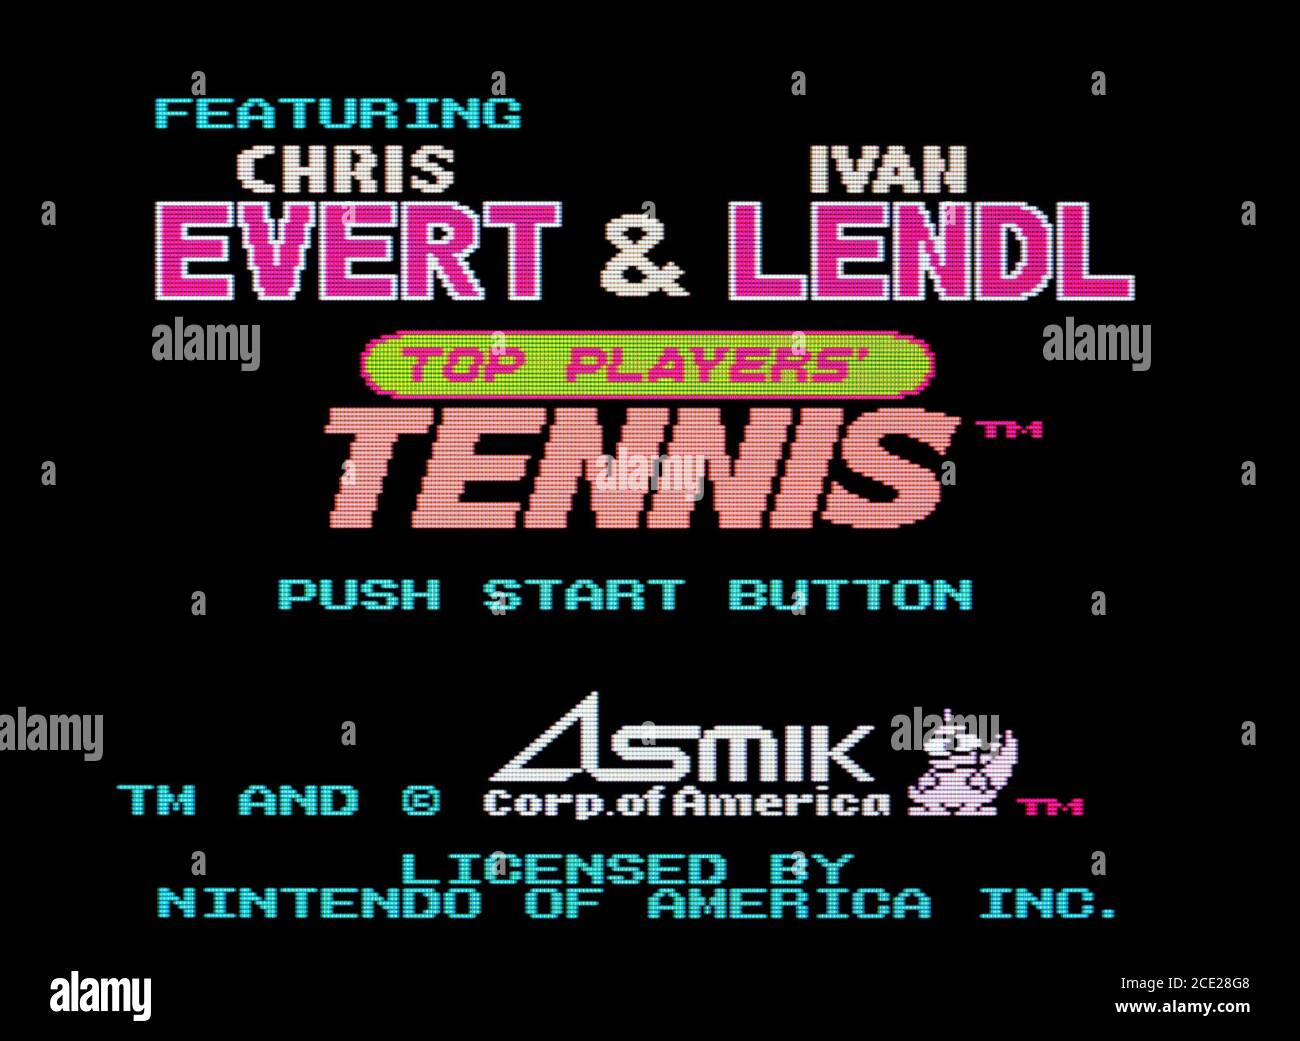 Chris Evert & Ivan Lendl Top Players' Tennis - Nintendo Entertainment System - NES Videogame - Editorial use only Stock Photo